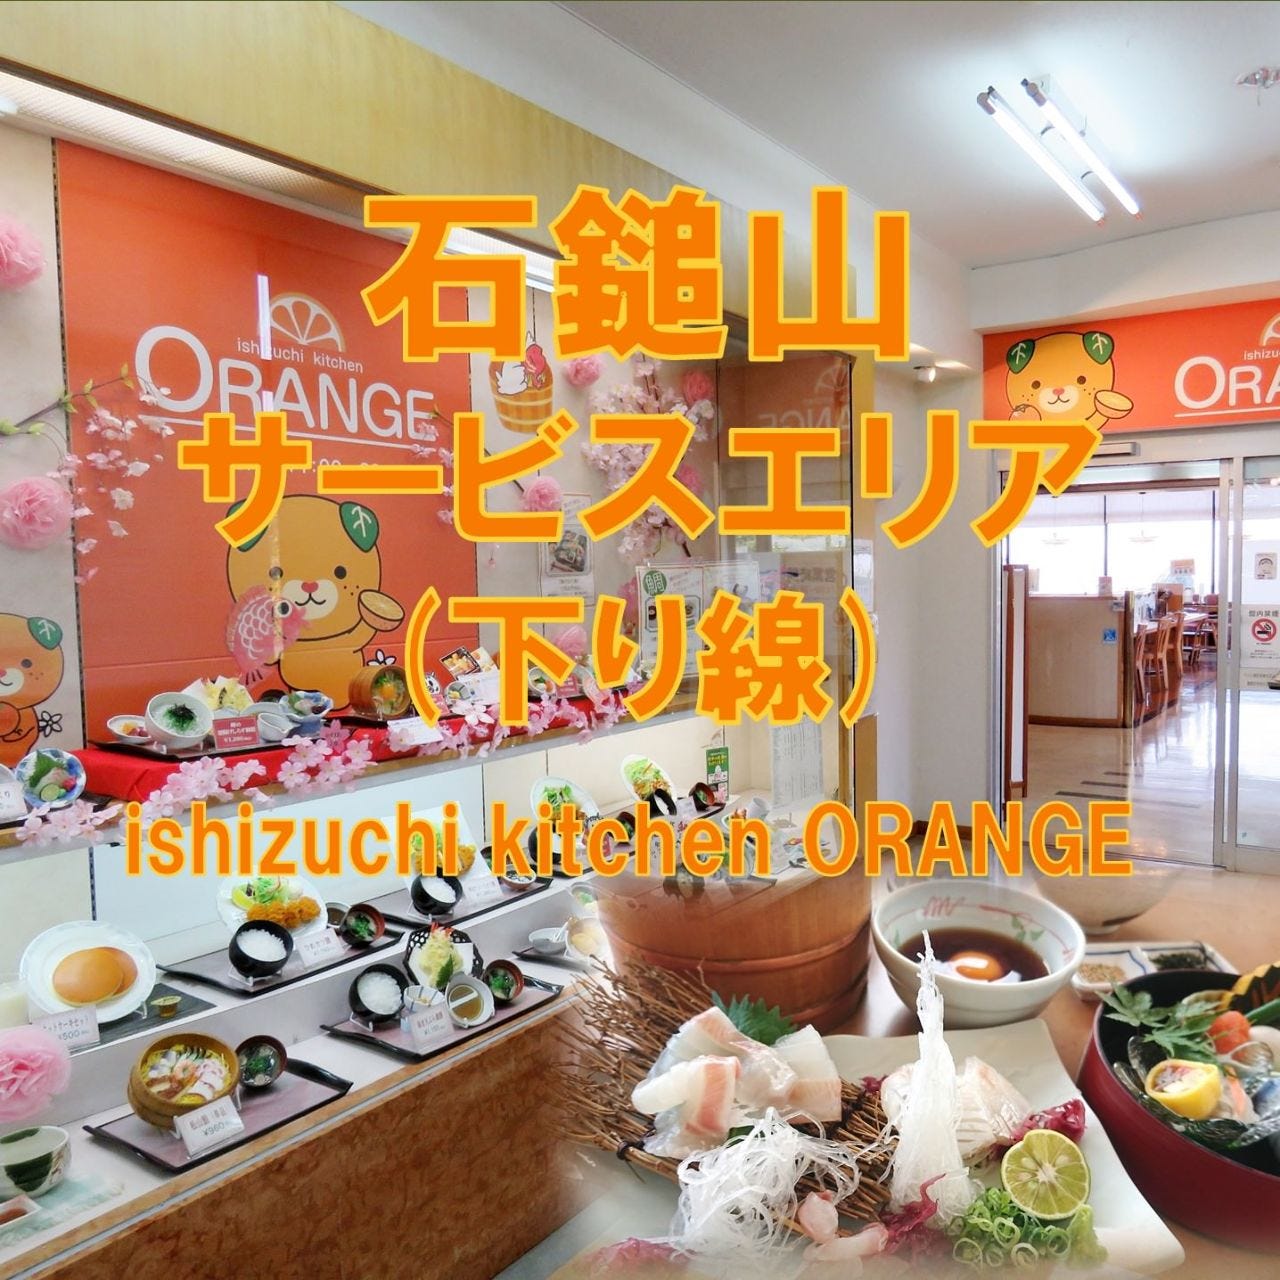 ishizuchi kitchen ORANGE image